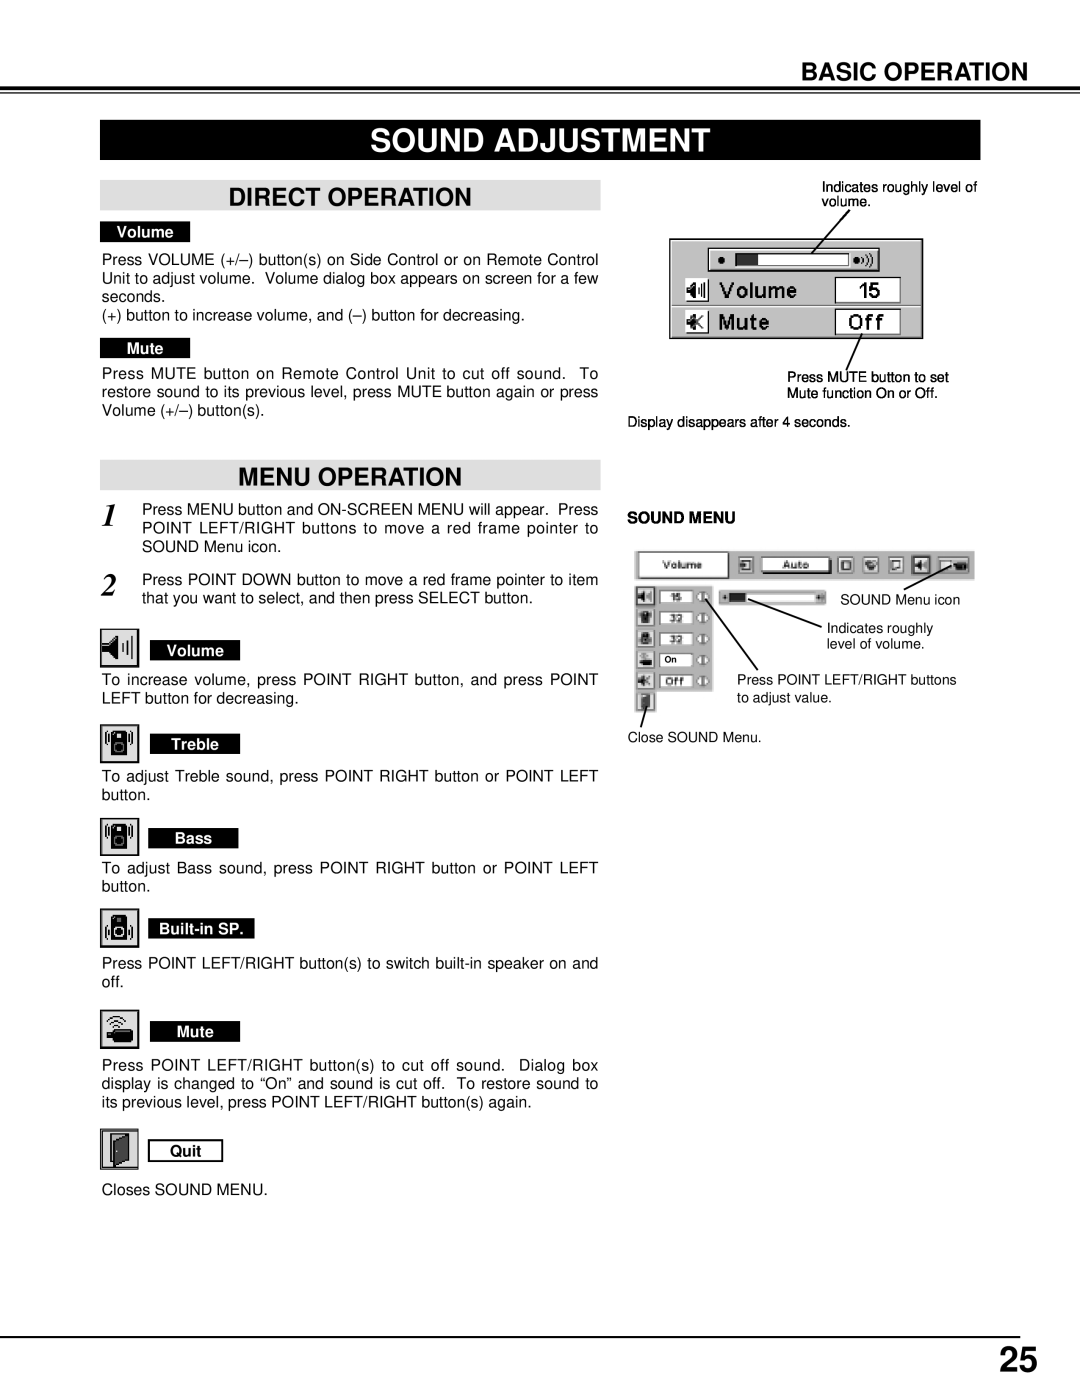 Eiki LC-UXT1 instruction manual Sound Adjustment, Direct Operation, Menu Operation, Basic Operation, Quit, Sound Menu 